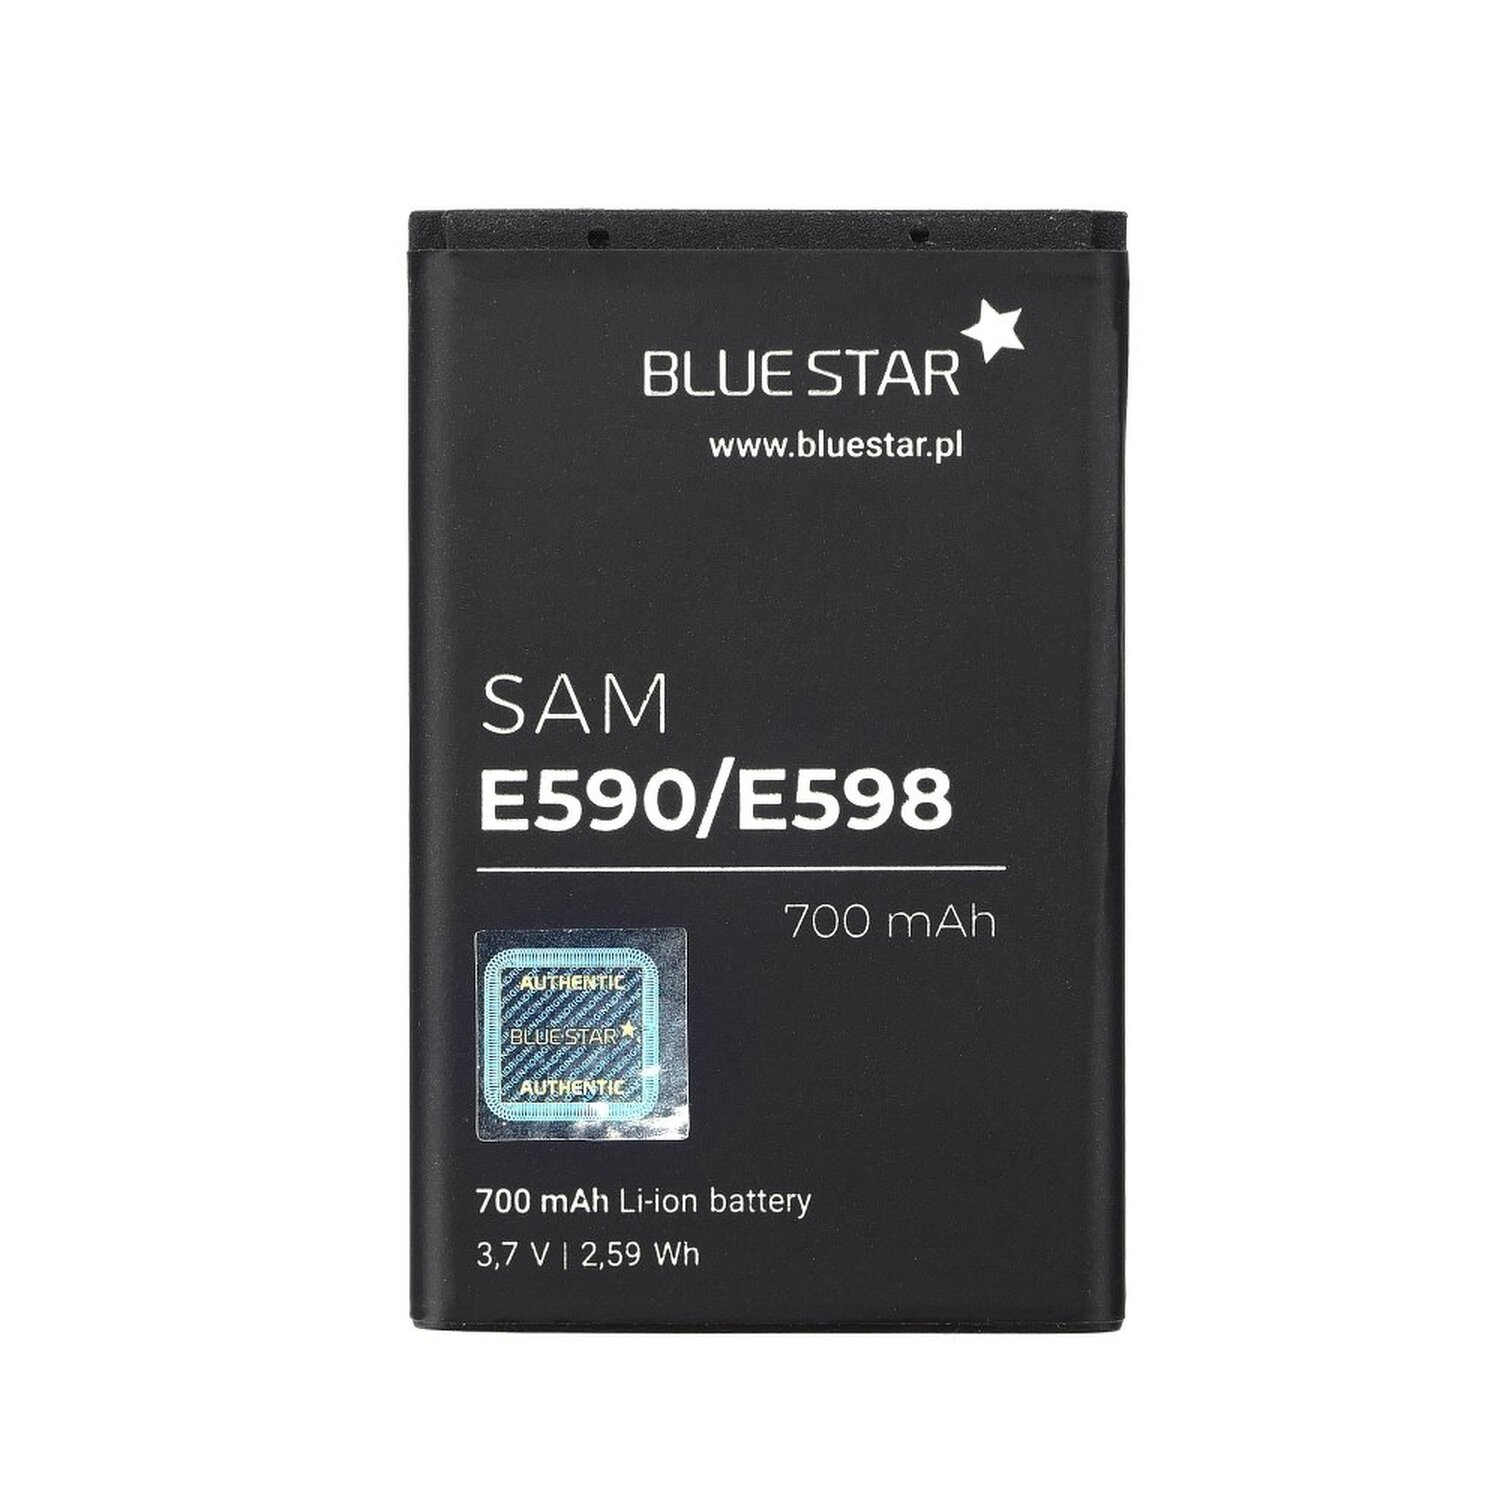 BLUESTAR Akku / Samsung E598 / Li-Ion E590 E790i Handyakku für